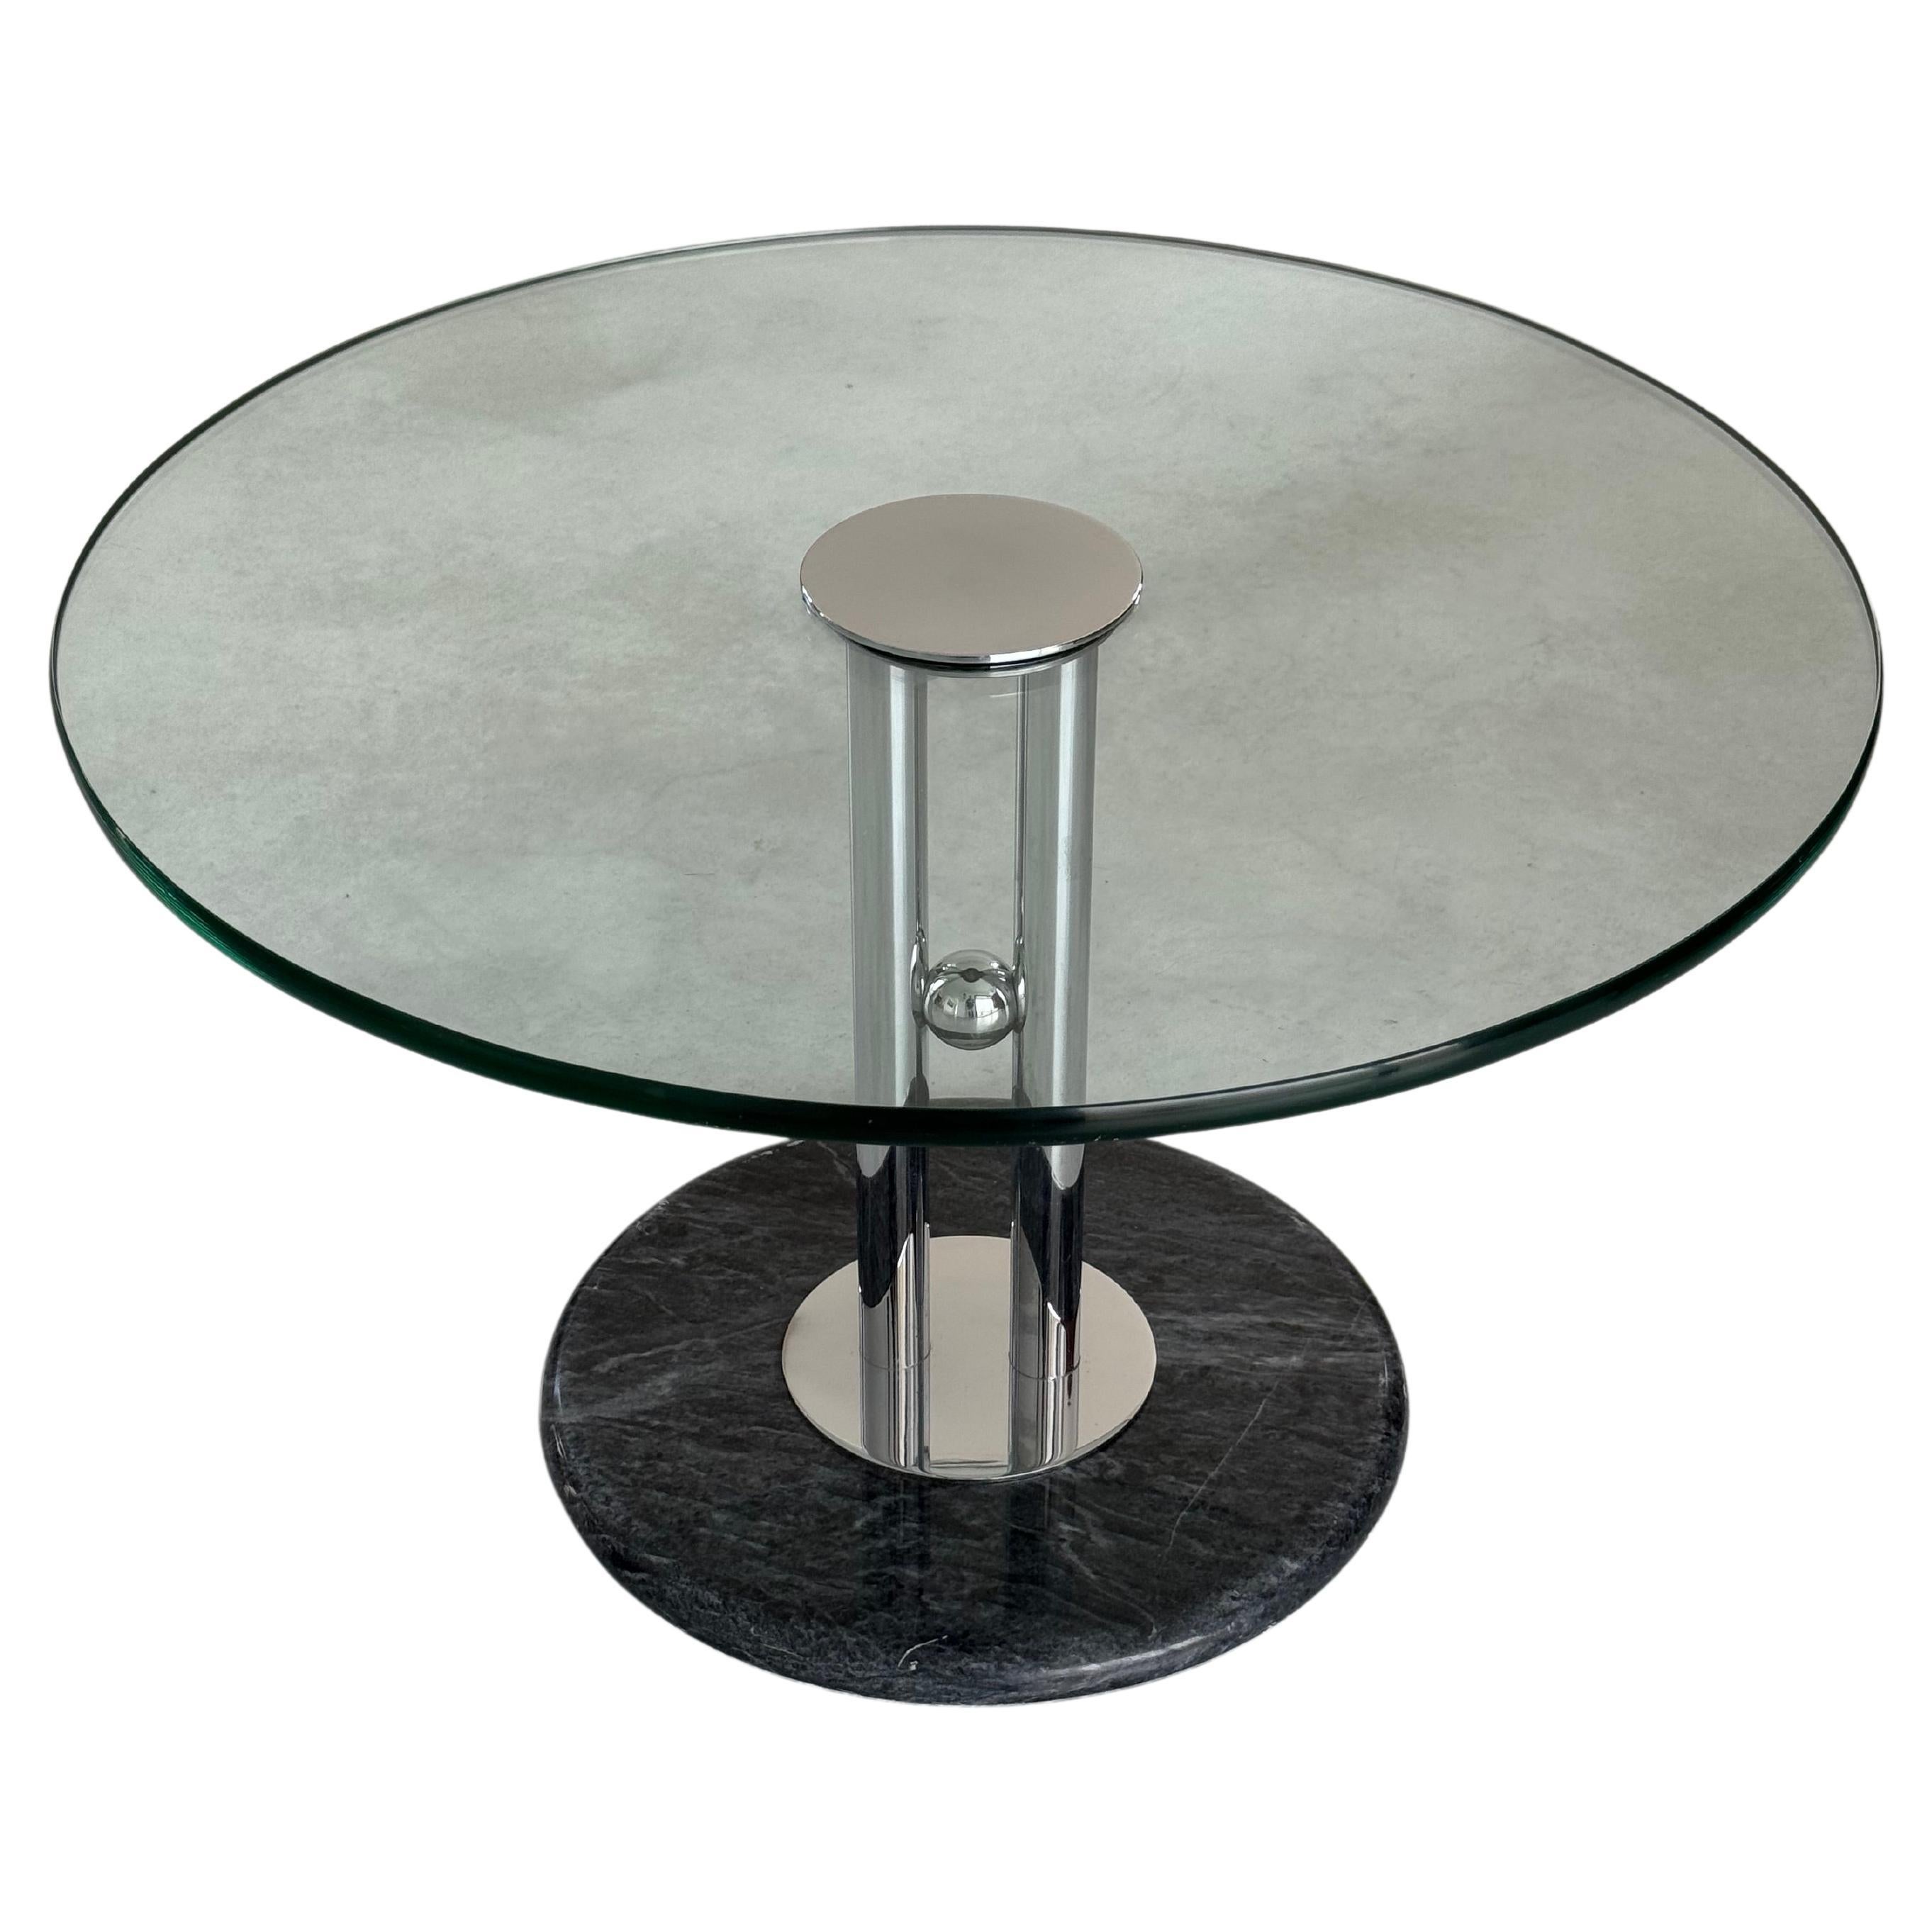 Post-Modern marble & glass coffee table, Italian design, circa 1980s